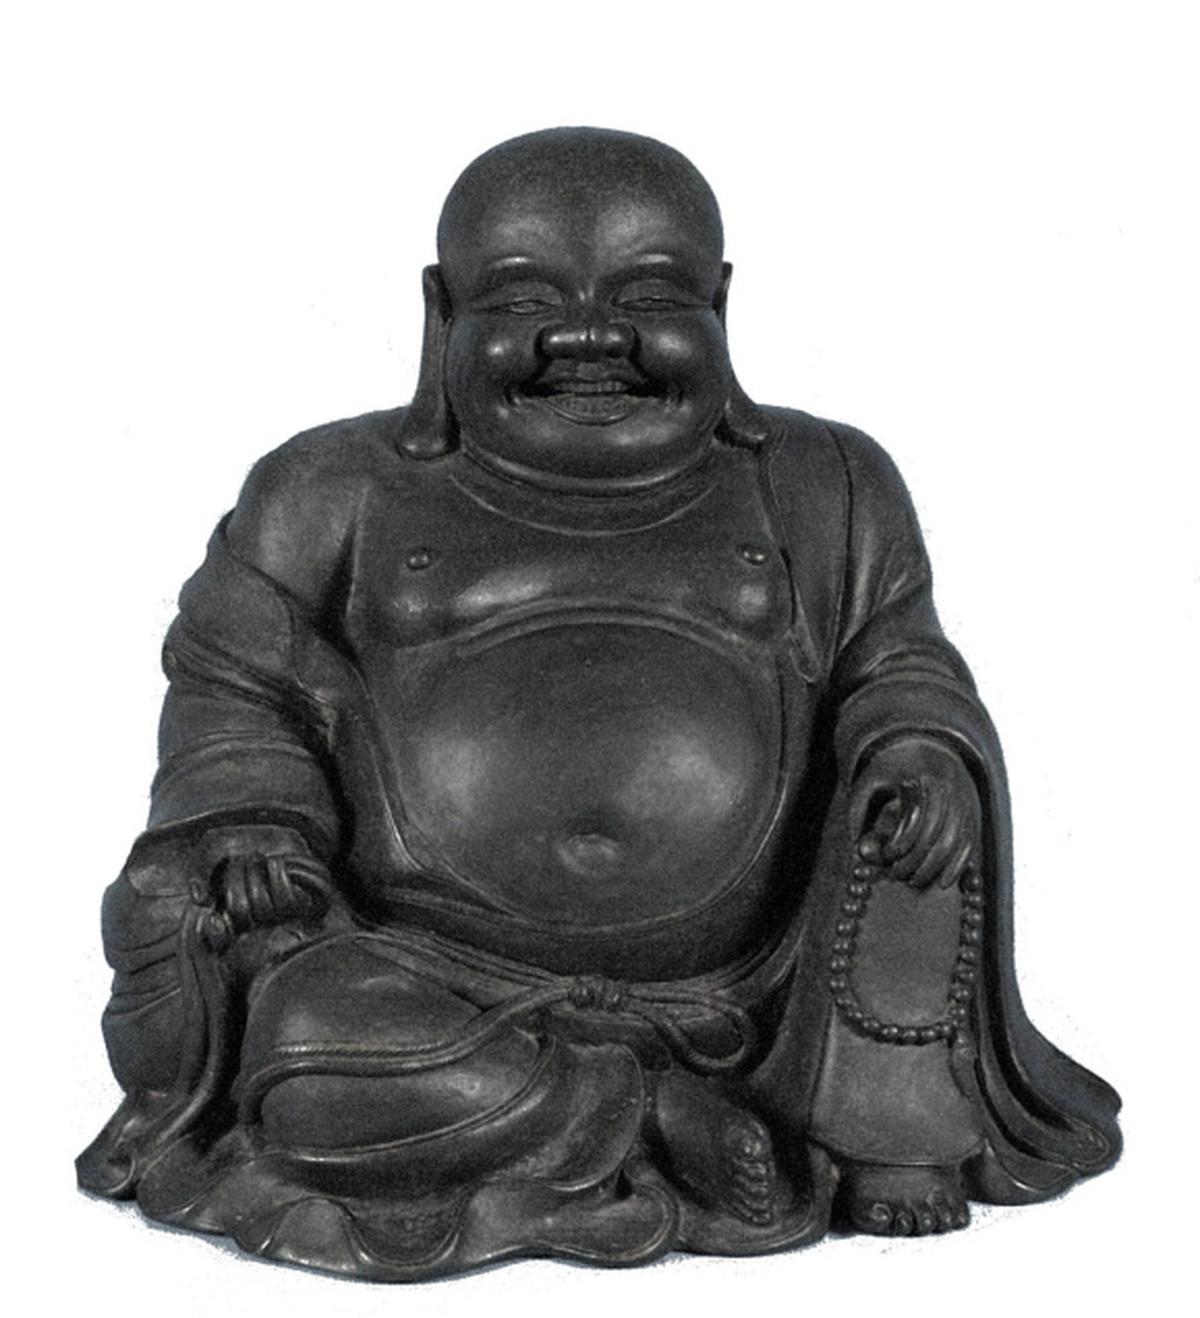 Laughing Buddha: Spreading good cheer, world over - The Hindu